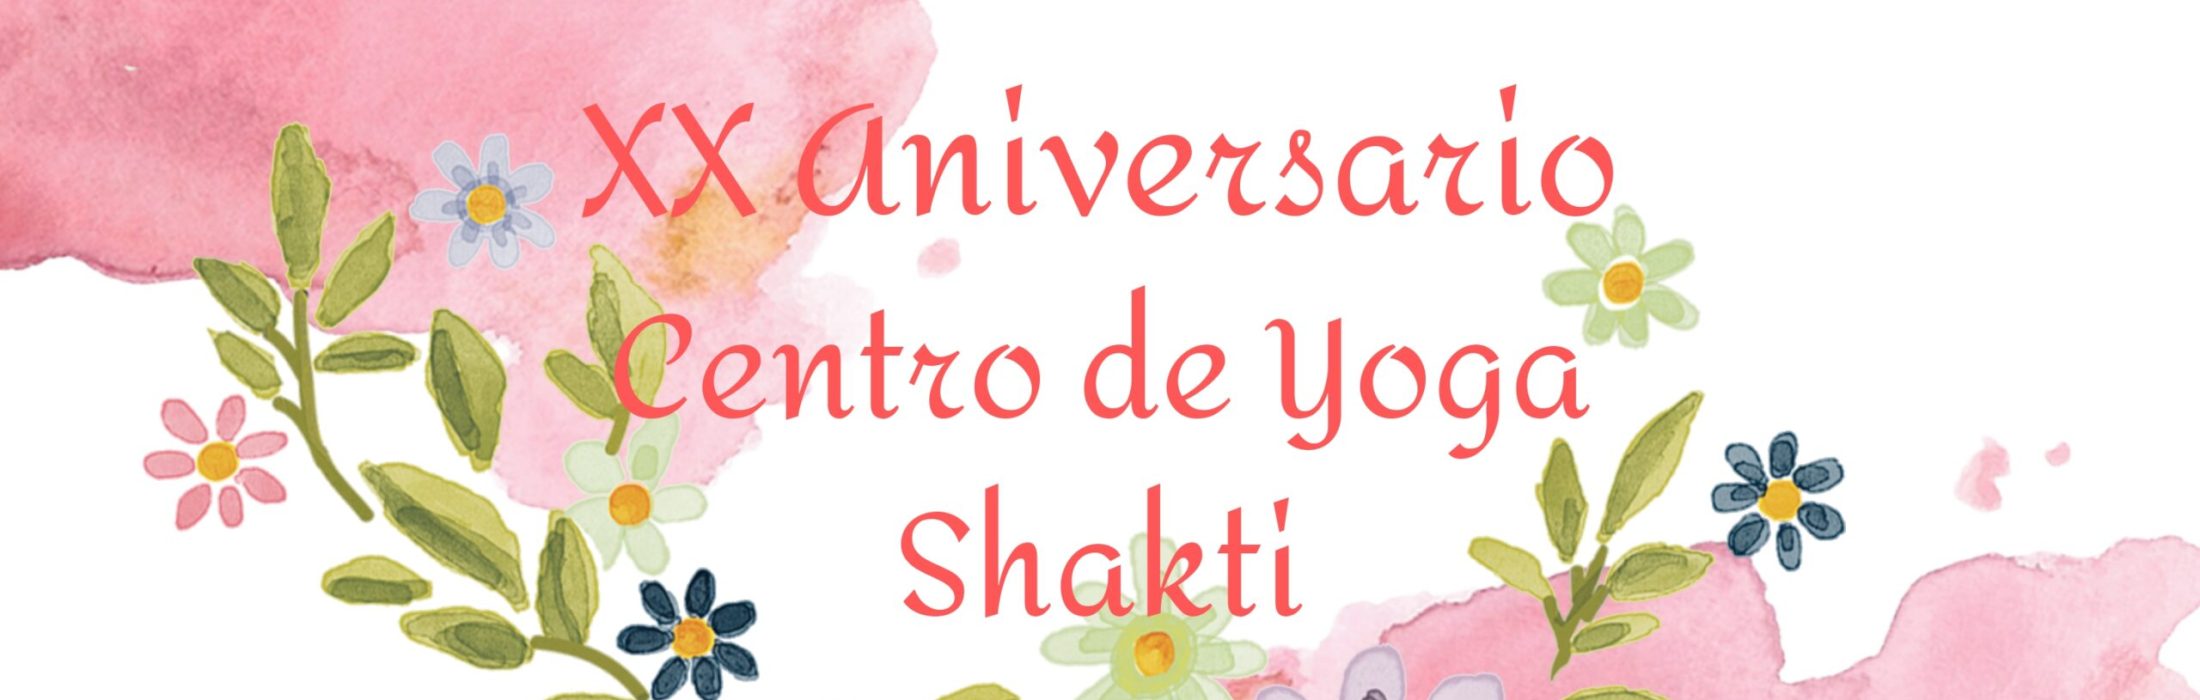 XX Aniversario Centro de Yoga Shakti